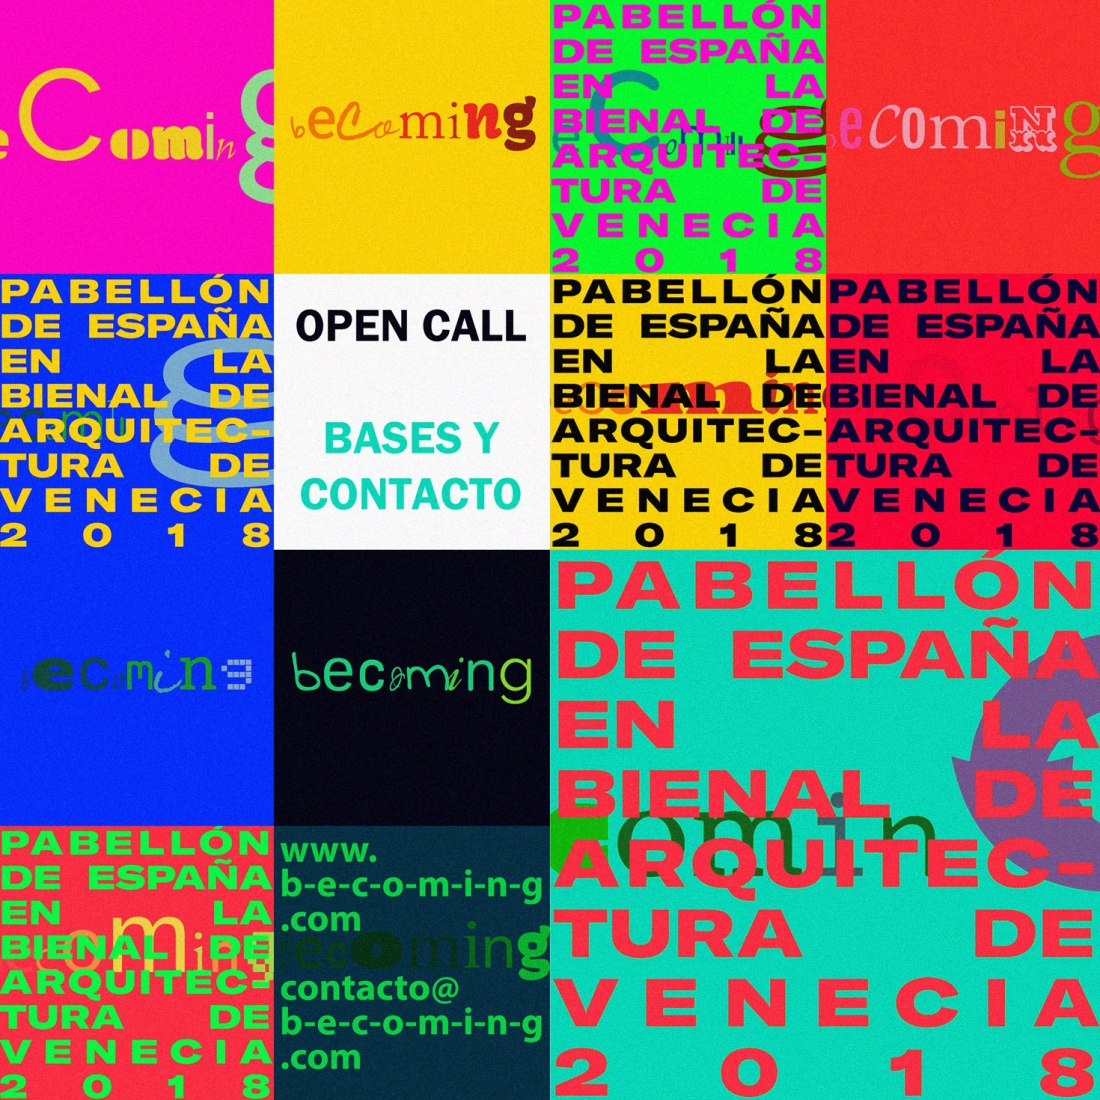 Convocatoria de propuestas - Open Call. Becoming, Pabellón de España en la Bienal de Arquitectura de Venecia 2018